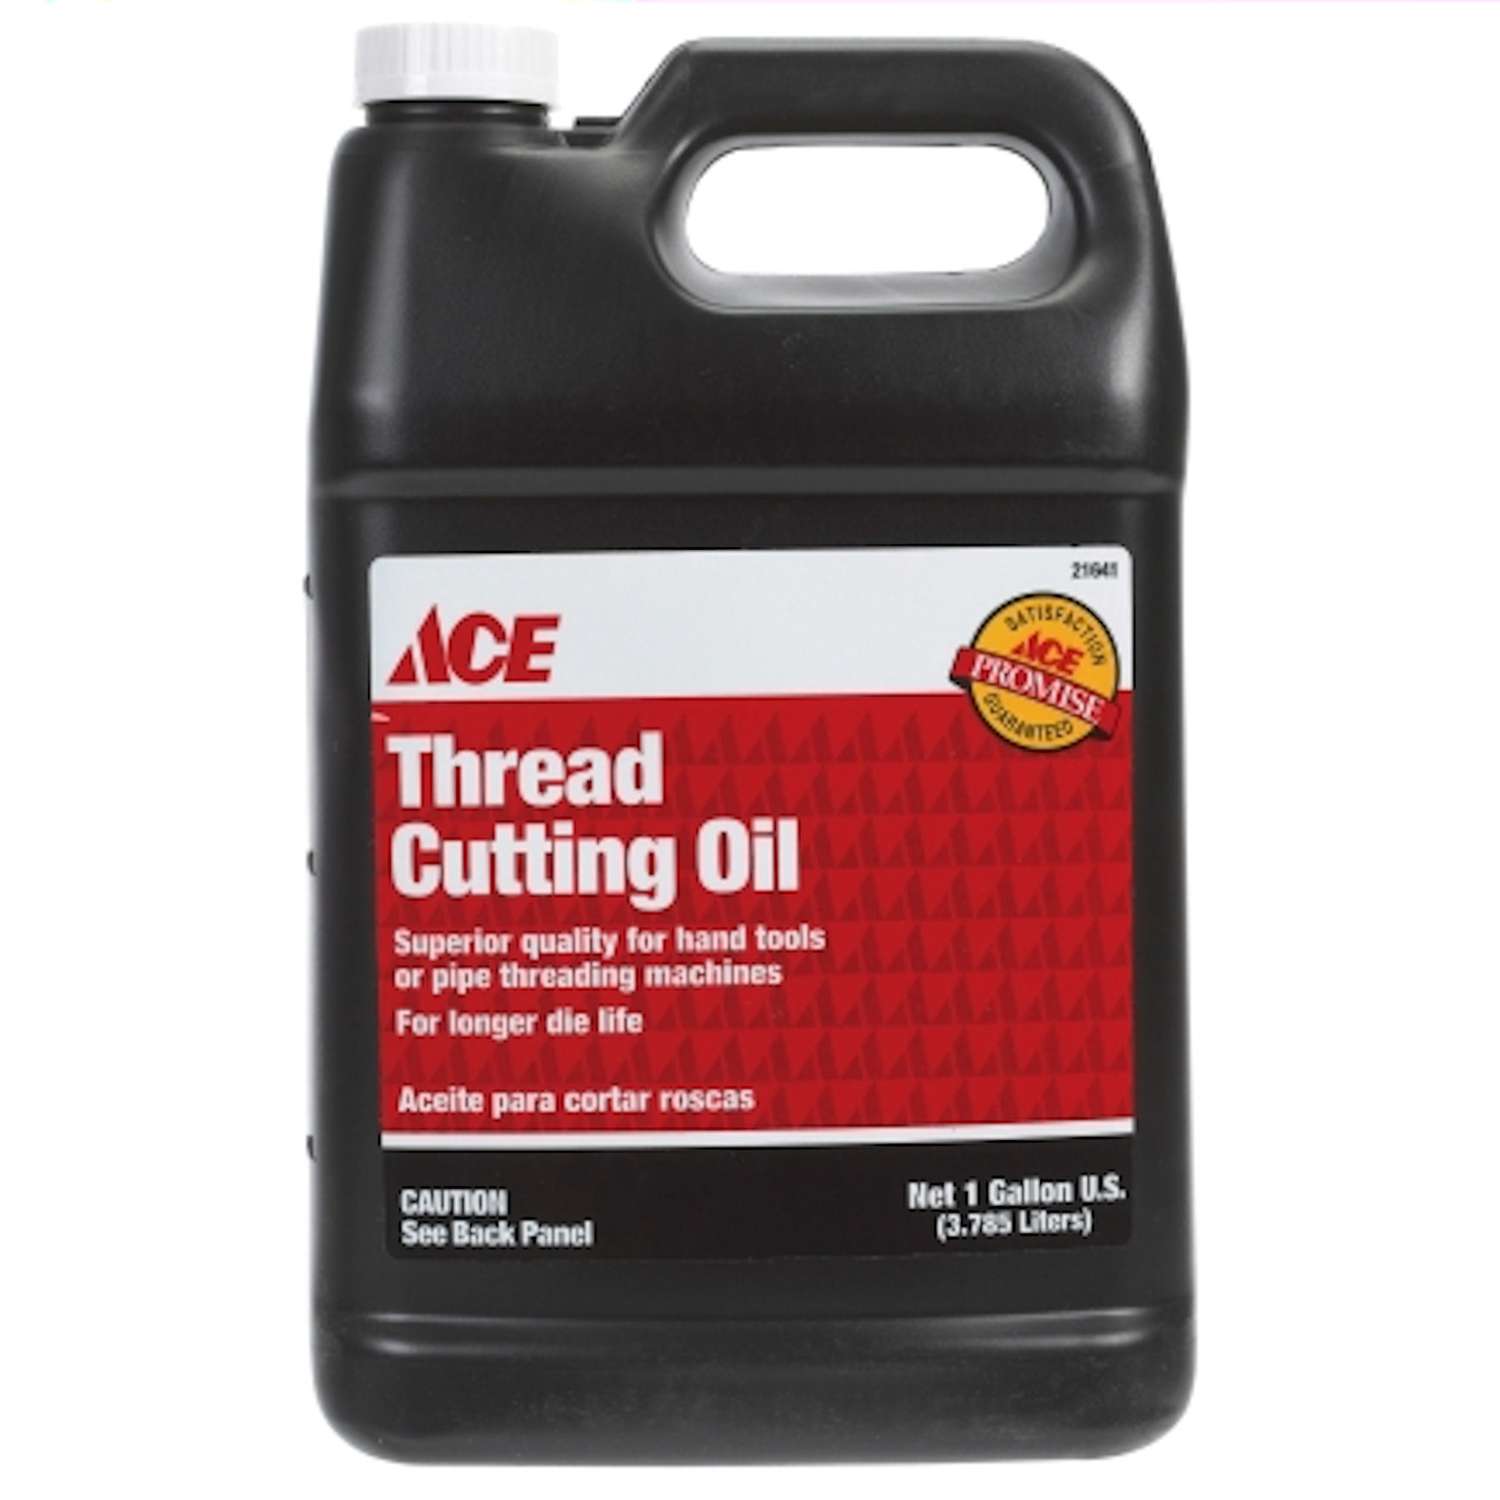 Oatey® Gallon Clear Cutting Oil (Hand Threading) - Statham, Georgia - Casto  Trading Co.